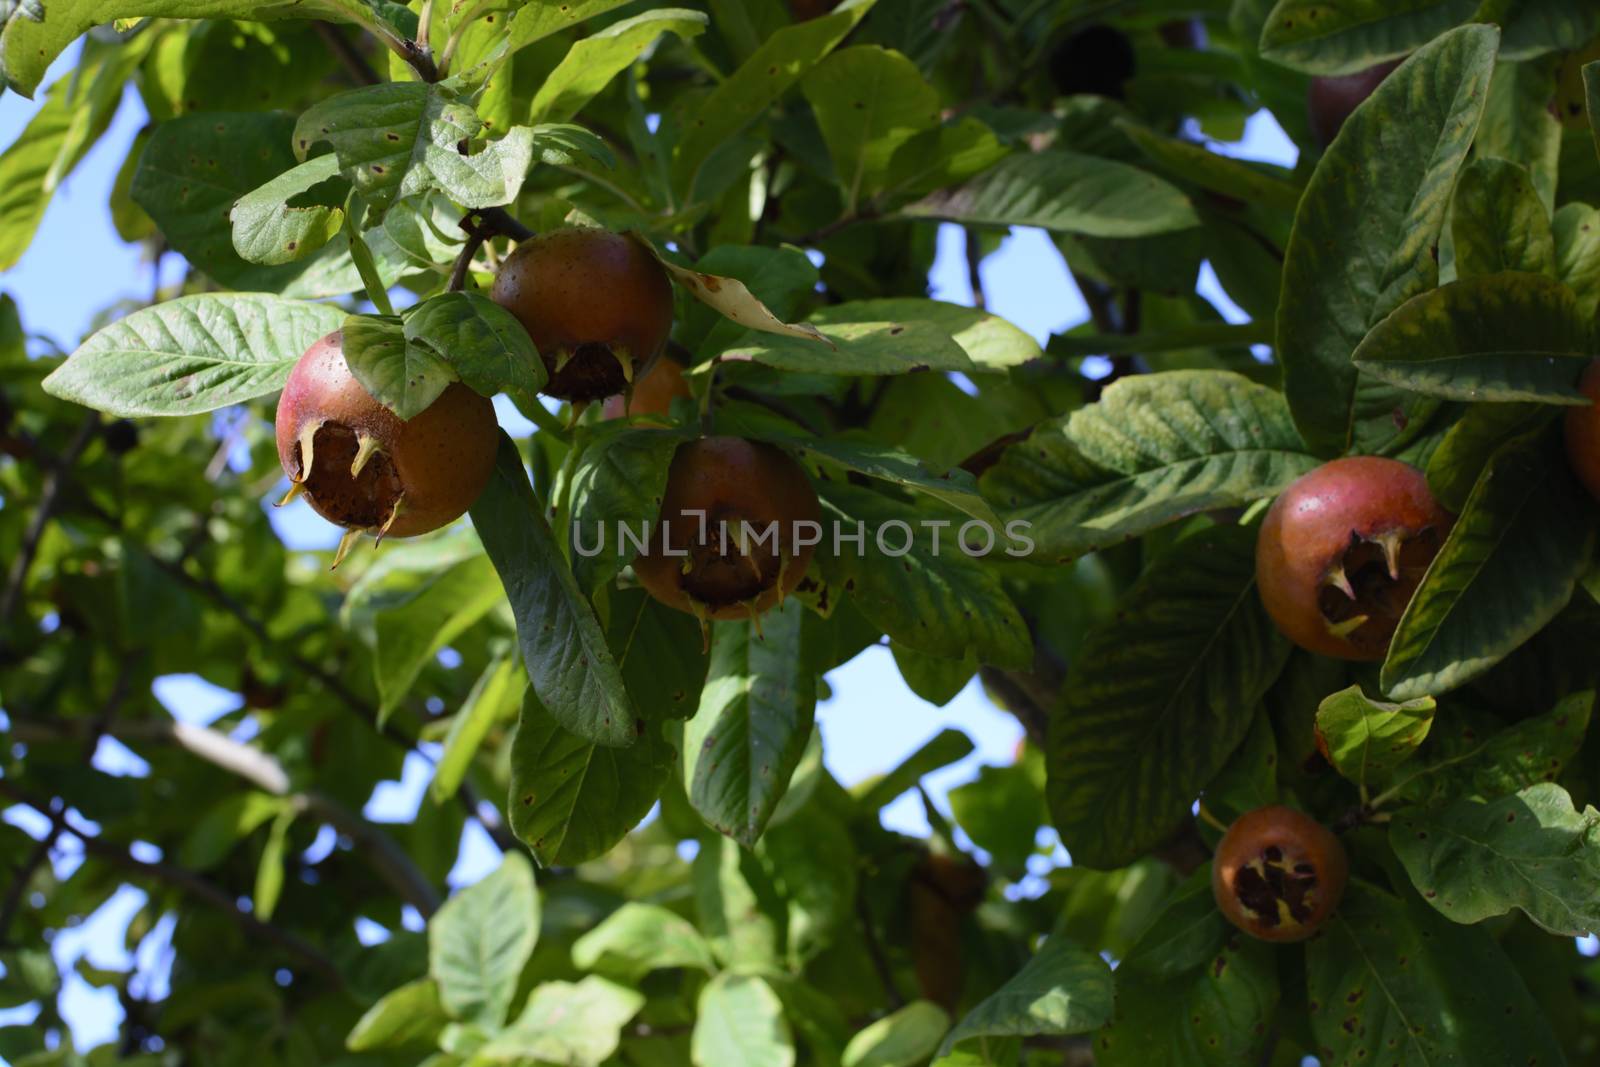 Common Medlar fruit by ArtesiaWells